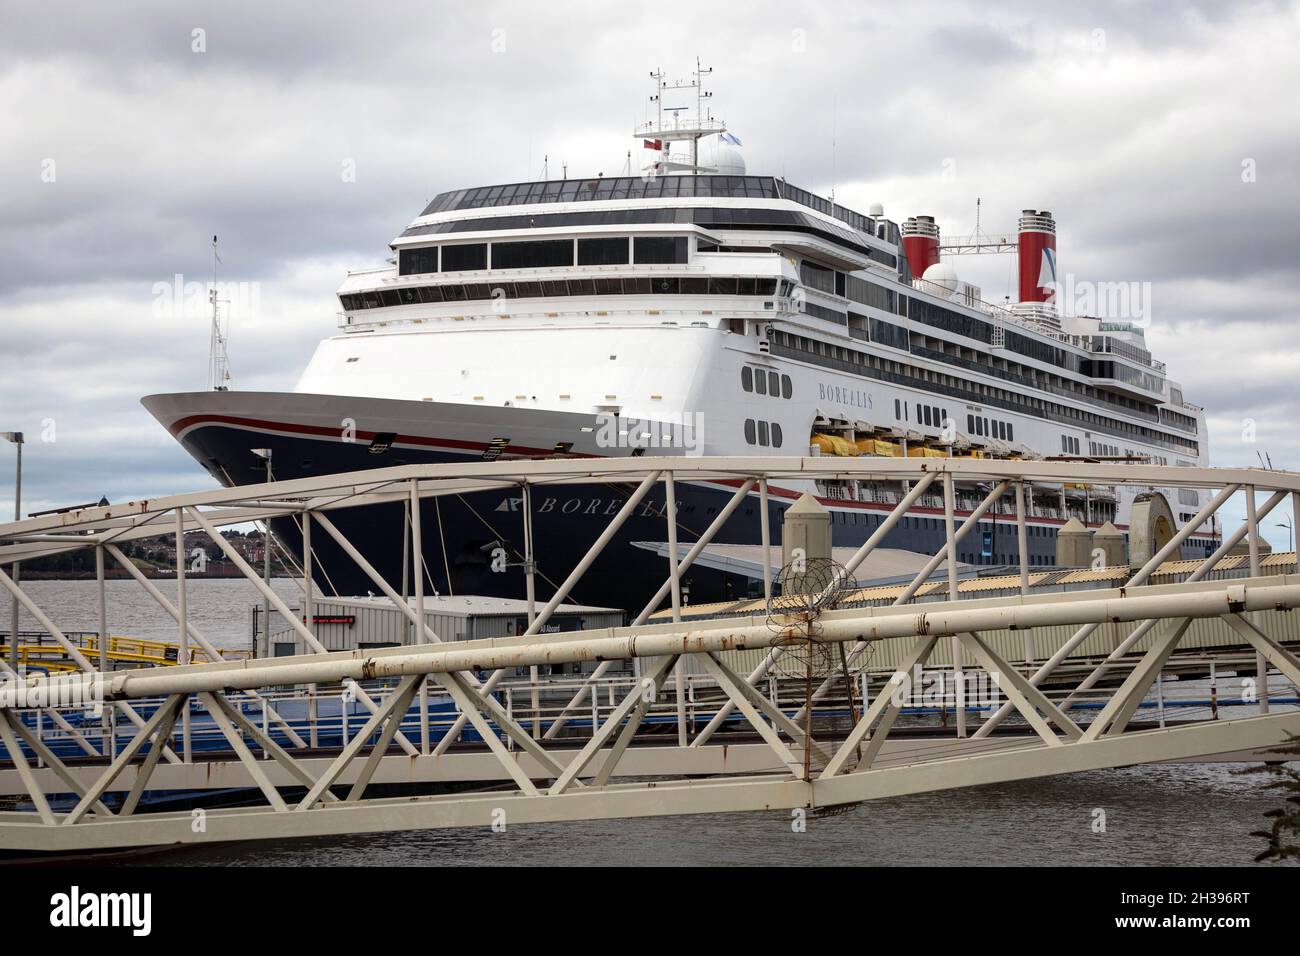 The cruise ship Borealis moored at Pier Head, Liverpool Stock Photo